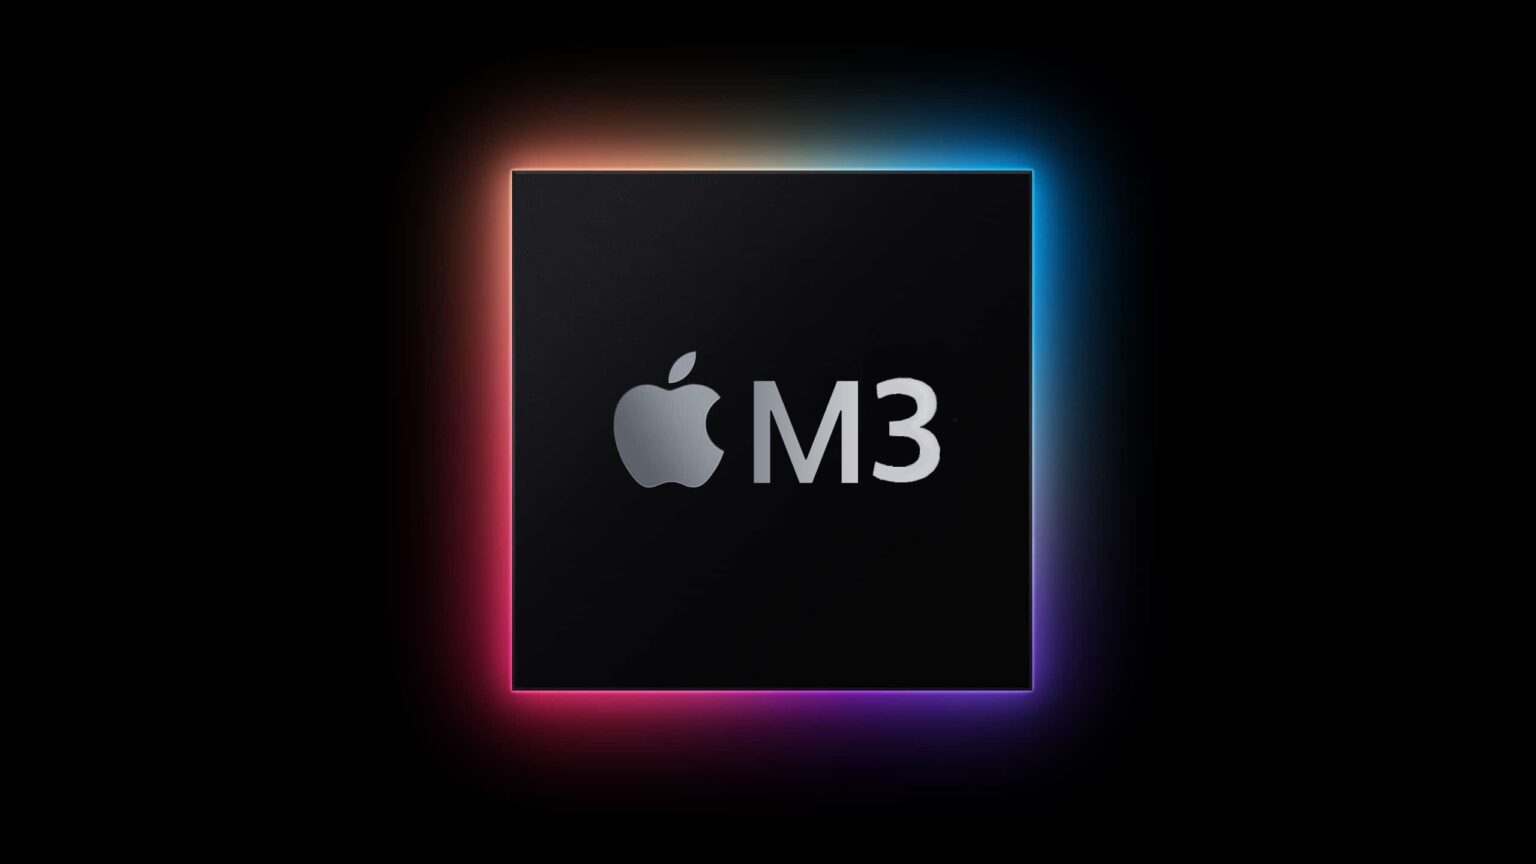 iMac with M3 processor already in development